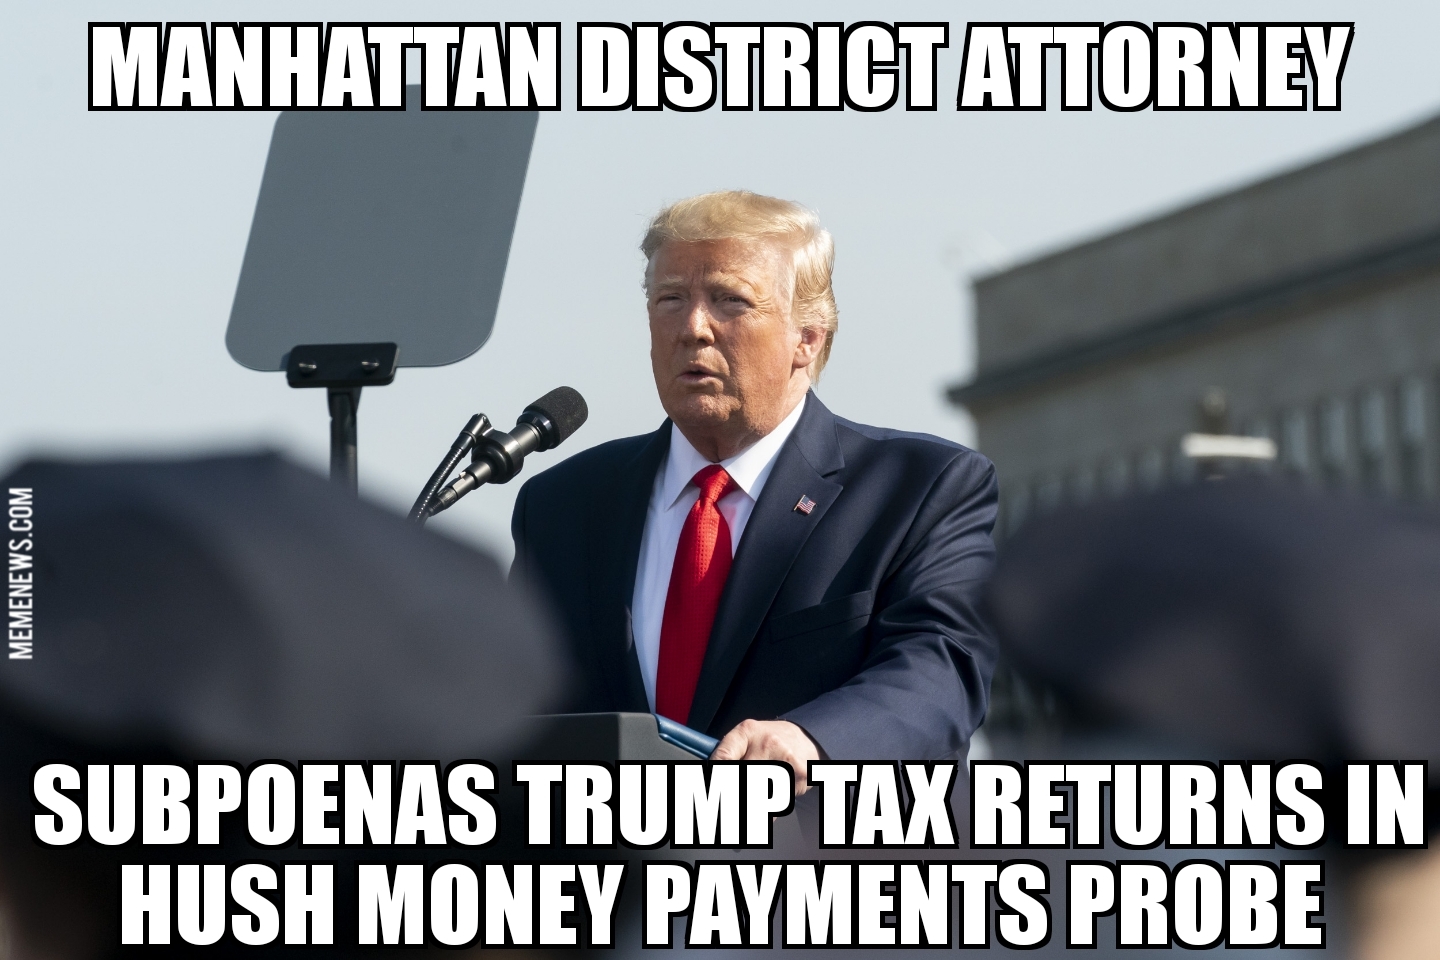 Manhattan DA subpoenas Trump tax returns